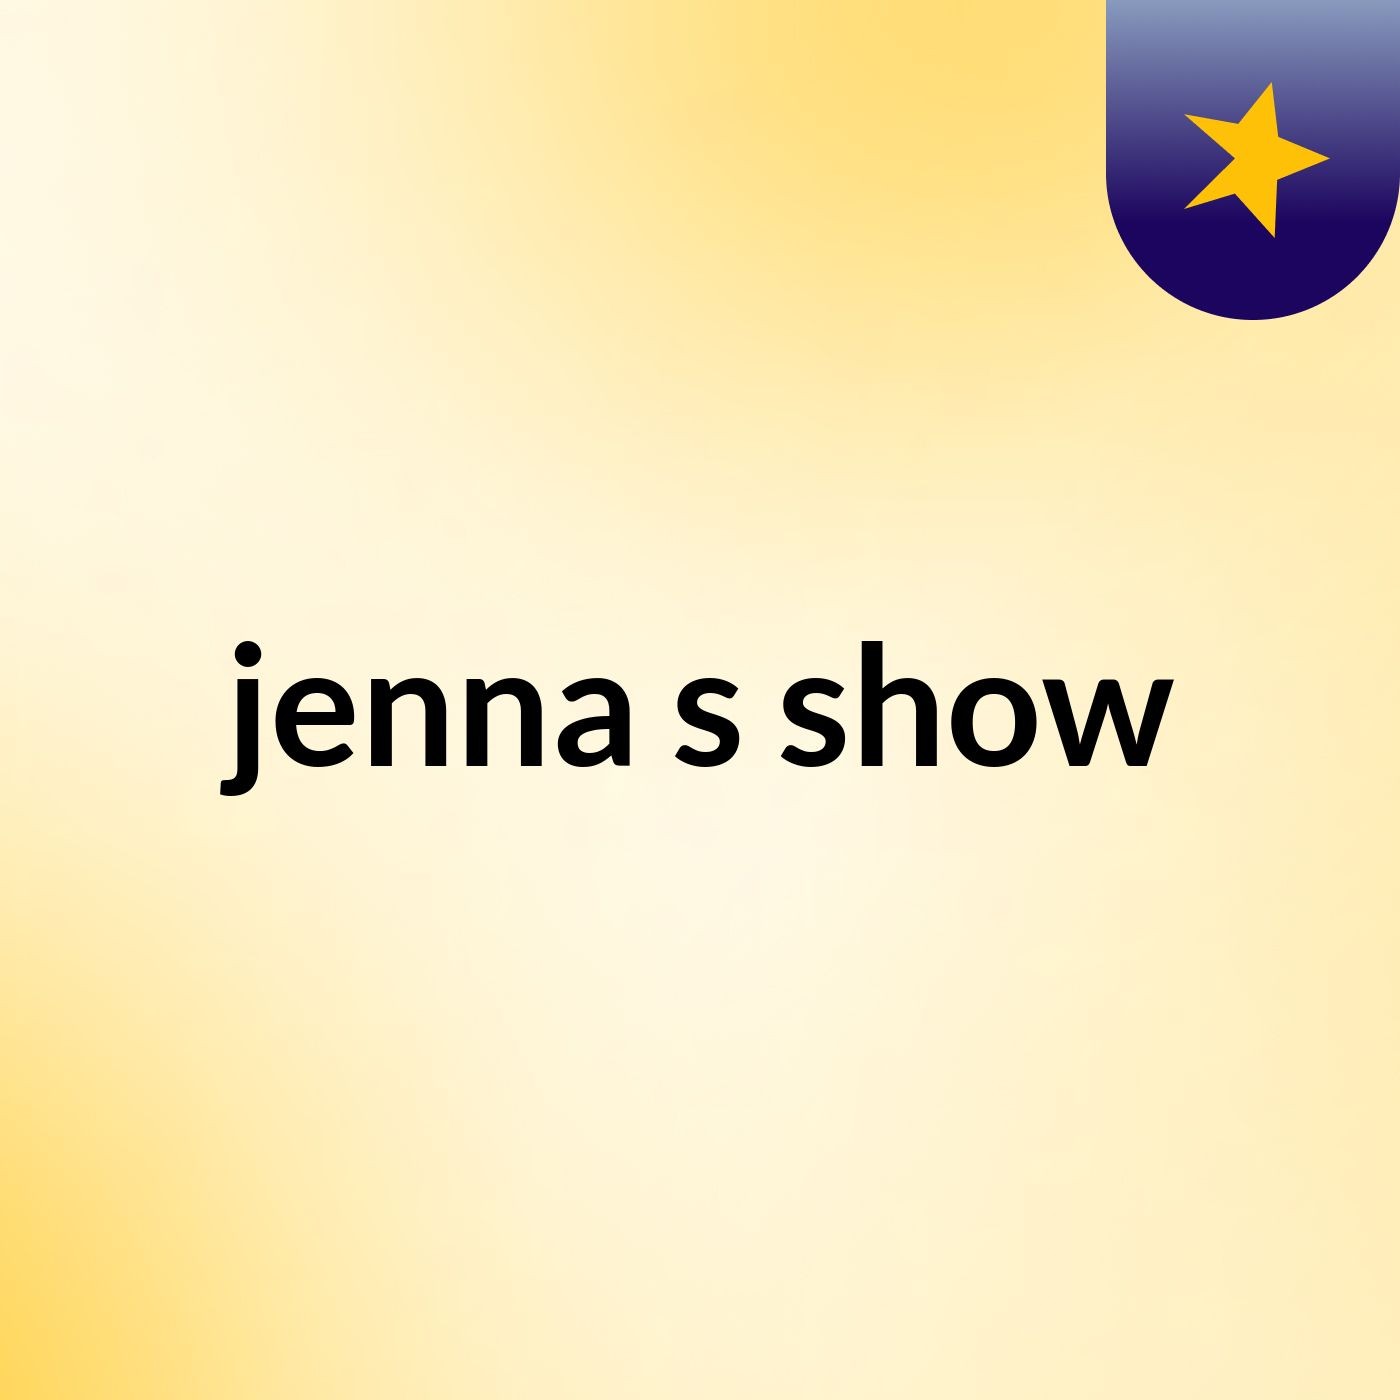 Episode 2 - jenna's show